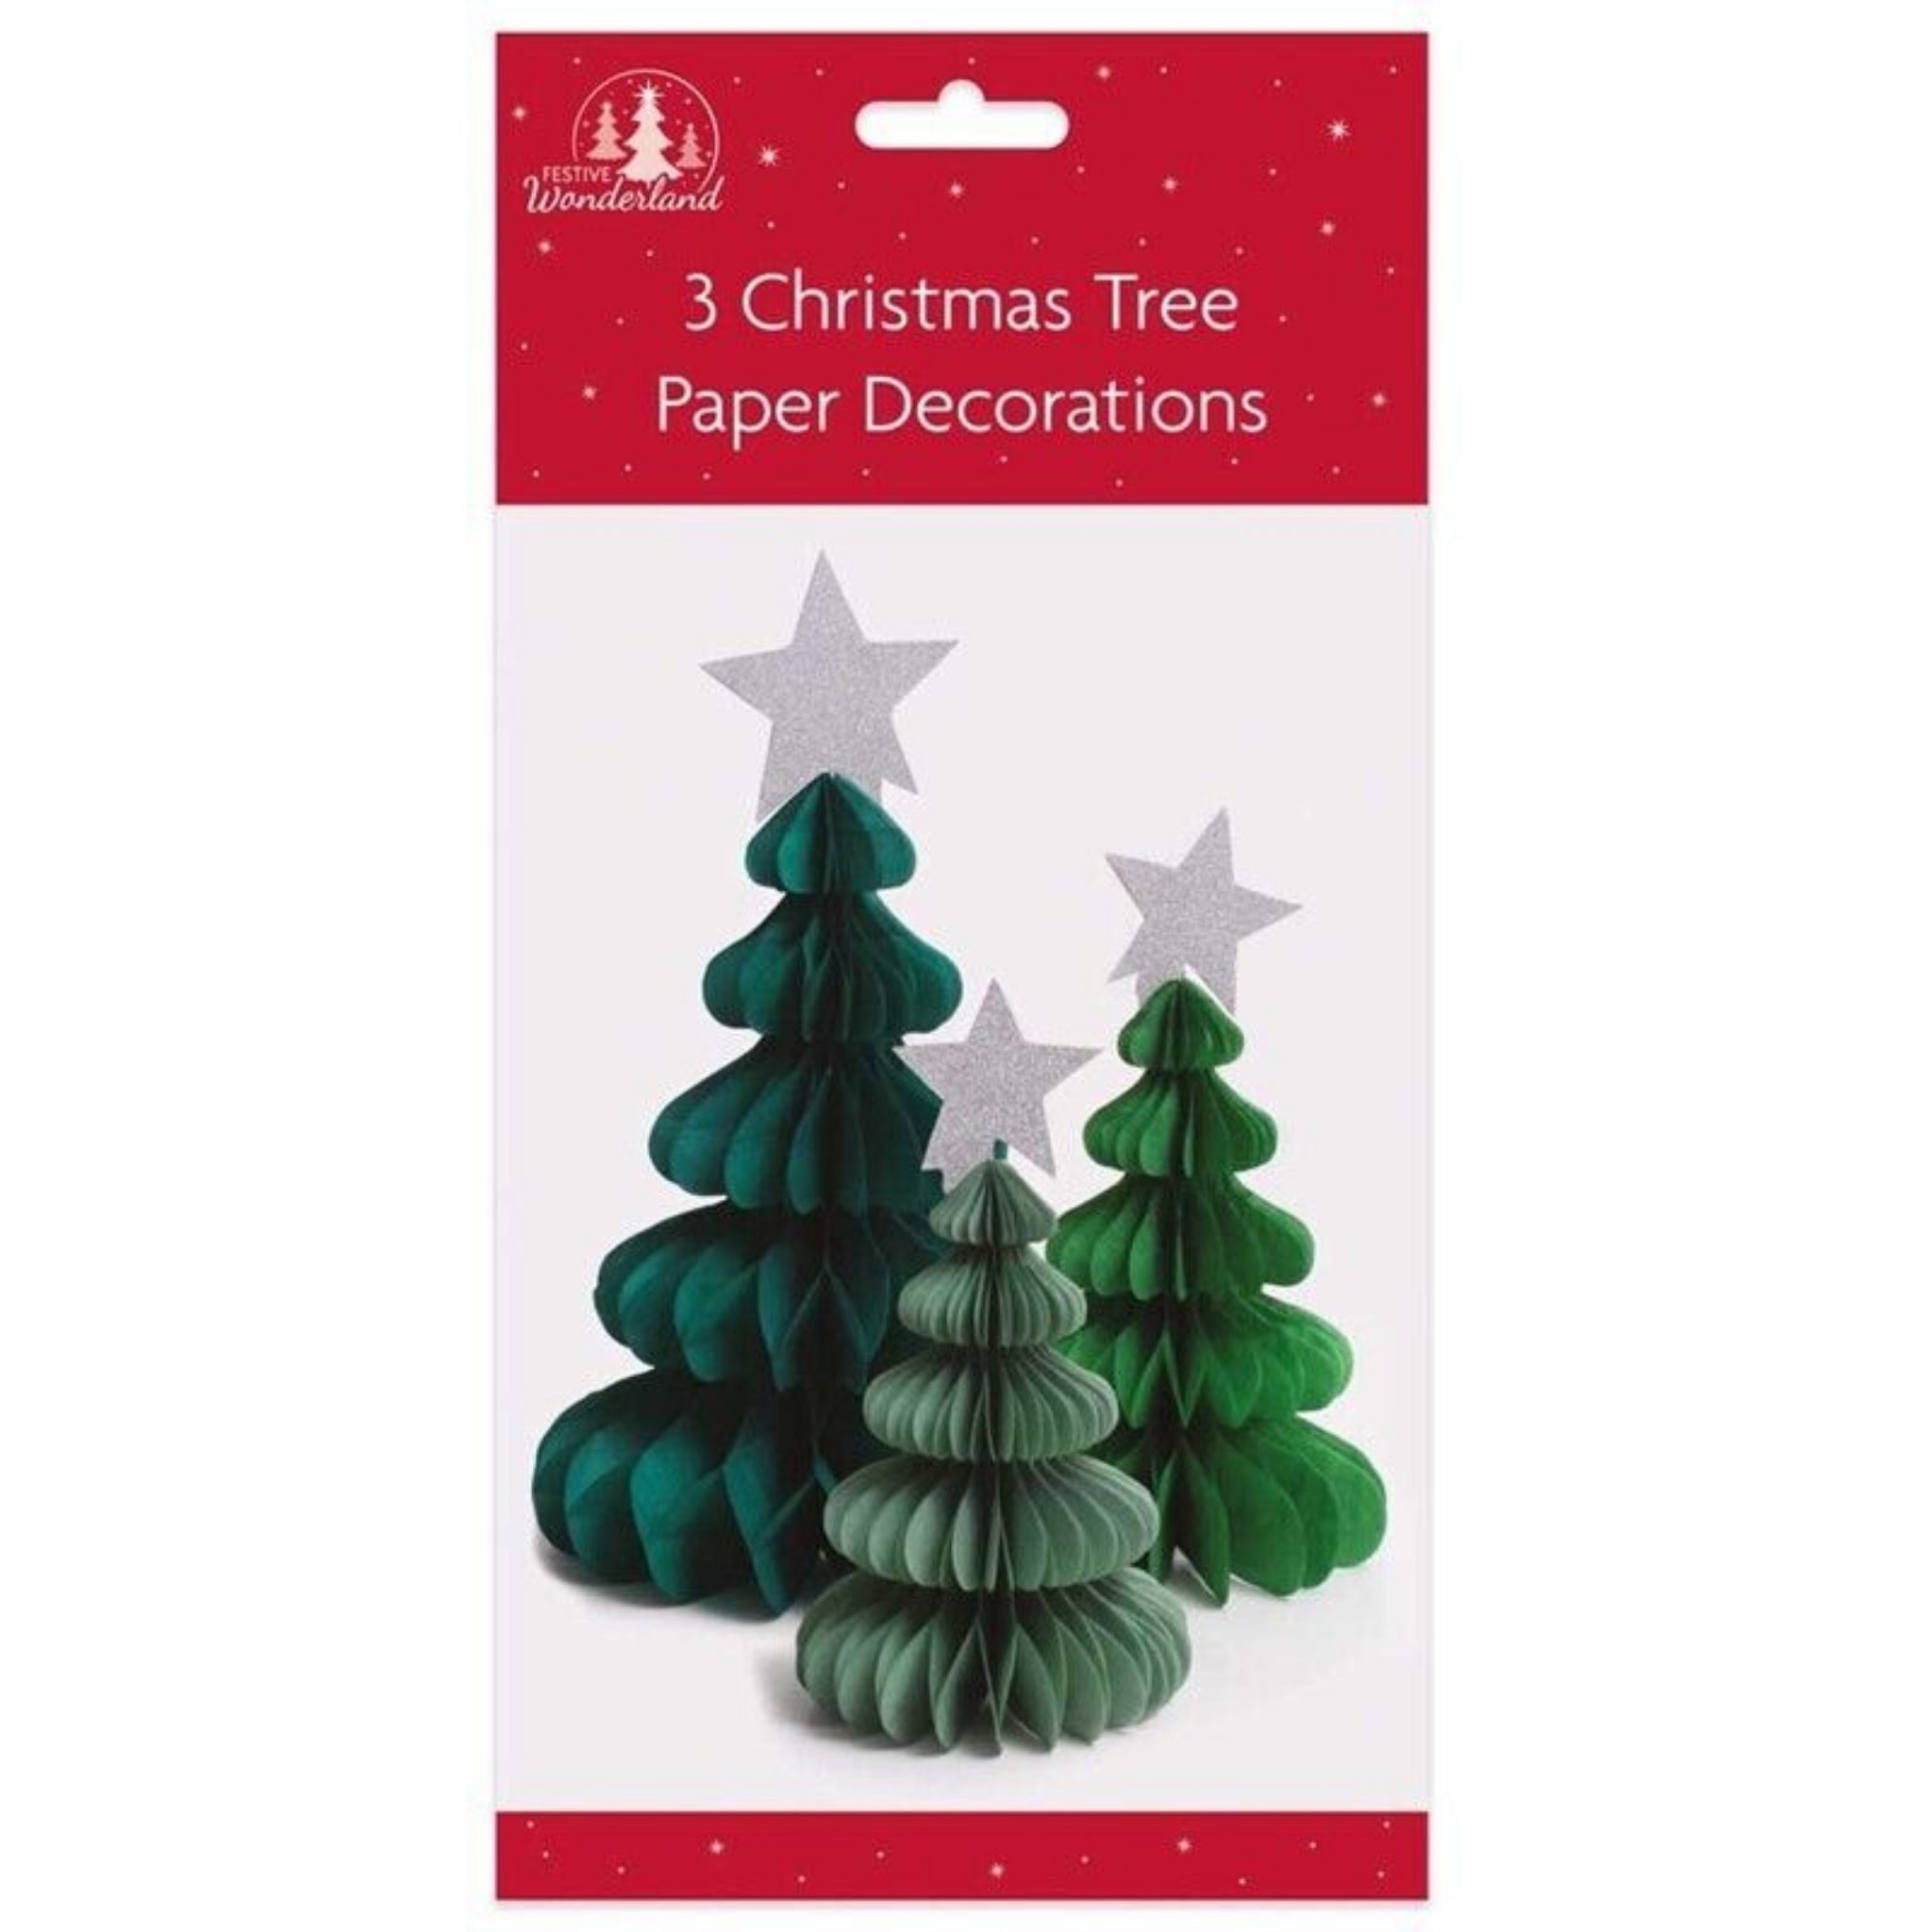 Beclen Harp 5pc Christmas/Xmas Honeycomb Paper Tree/Santa/Snowman Tablescape Decoration-Perfect Christmas/Xmas Party Hanging Decor